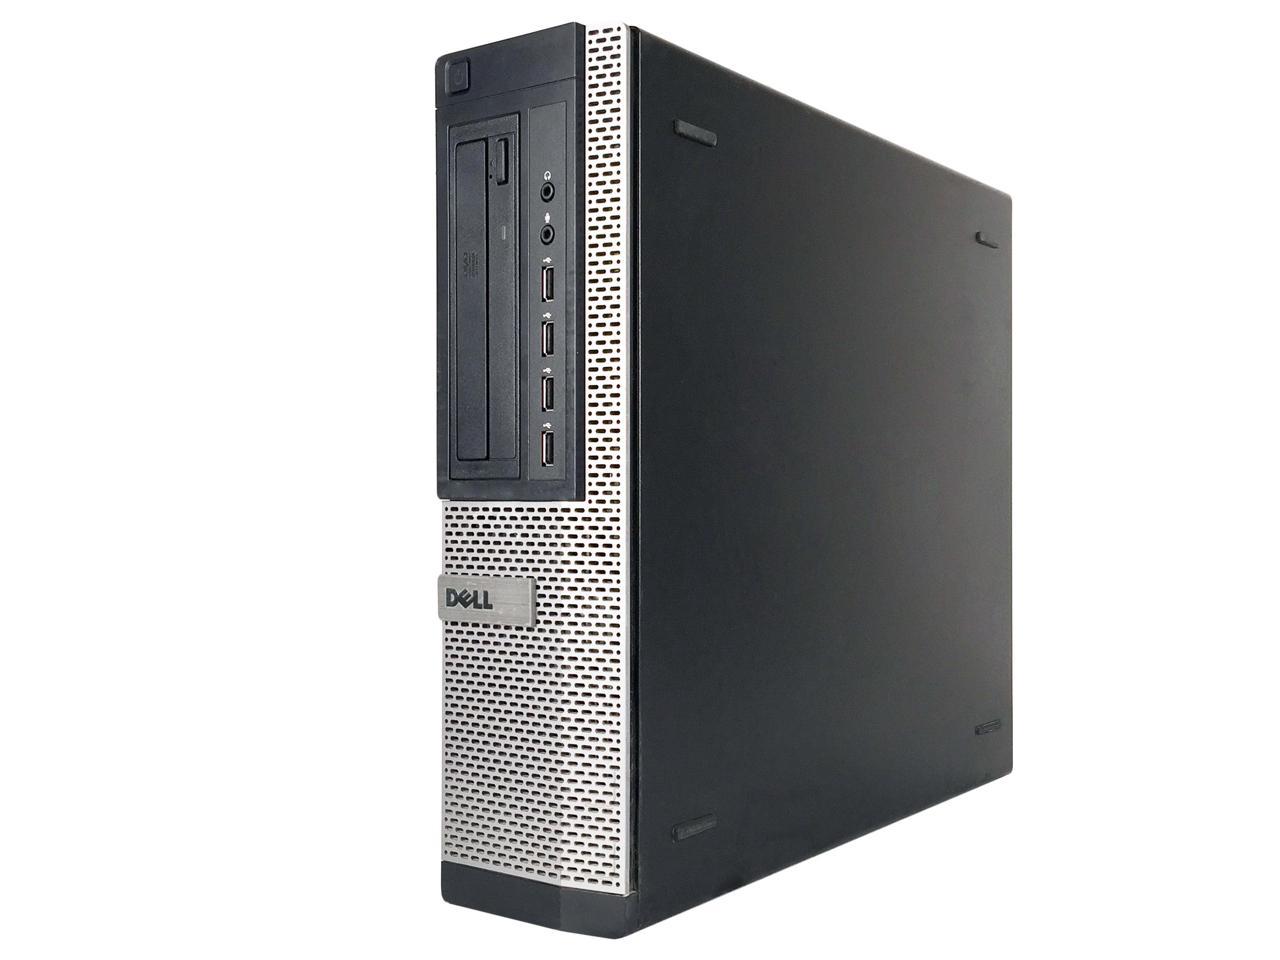 Refurbished Dell Grade A OptiPlex 990 Desktop Computer, Intel Core I5-2500 (3.3 GHz), 16G DDR3, 500G HDD, DVD, WIFI, Windows 10 Home 64-bit (English/Spanish), 1 Year Warranty